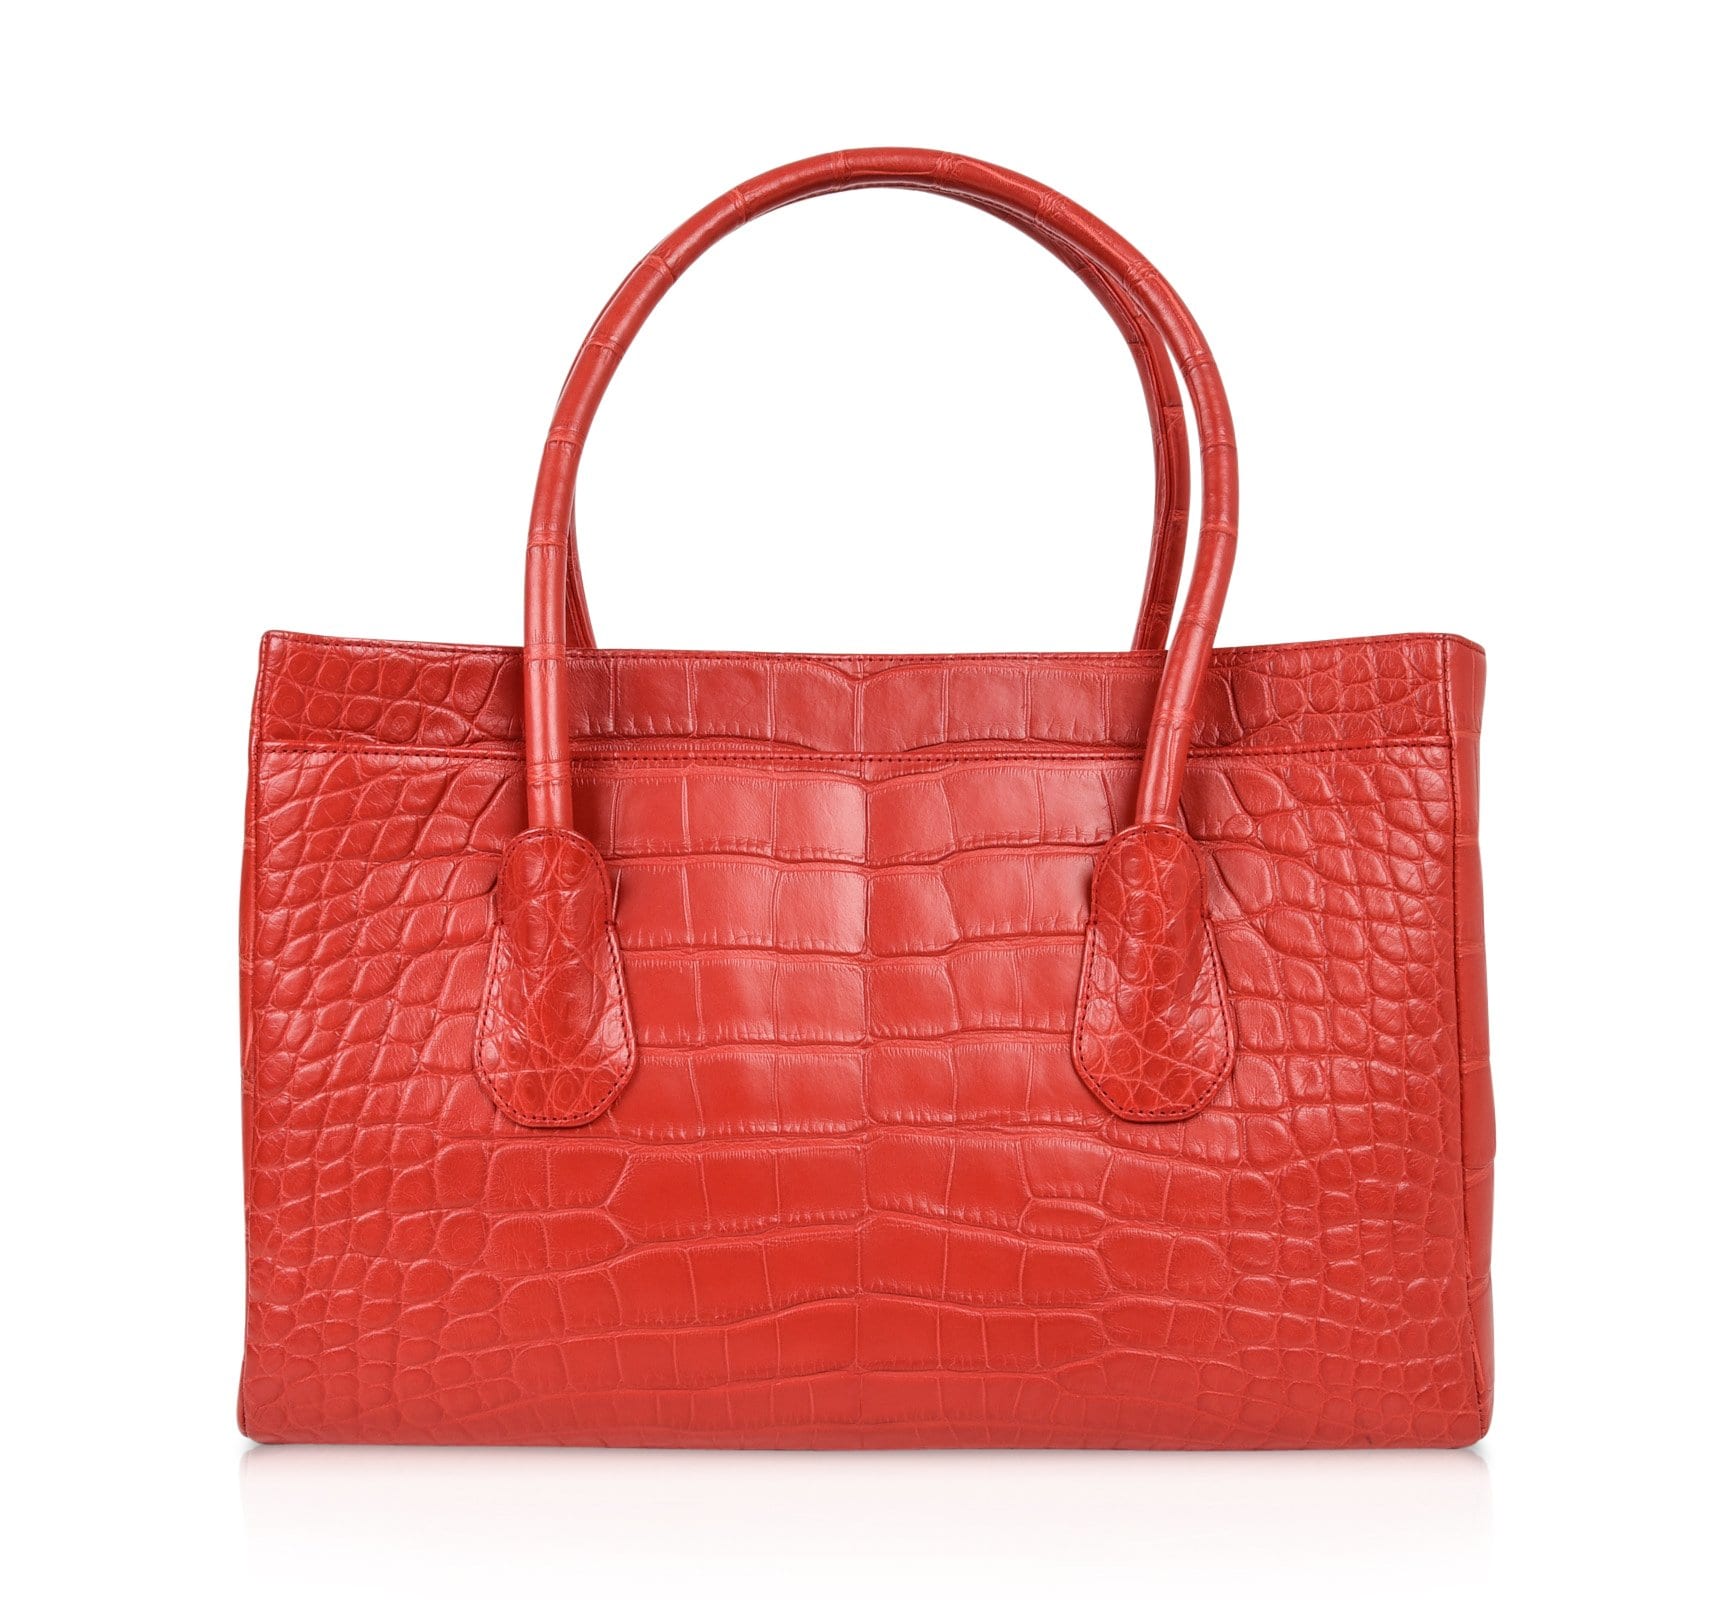  Chanel Bags For Women Handbag Clearance